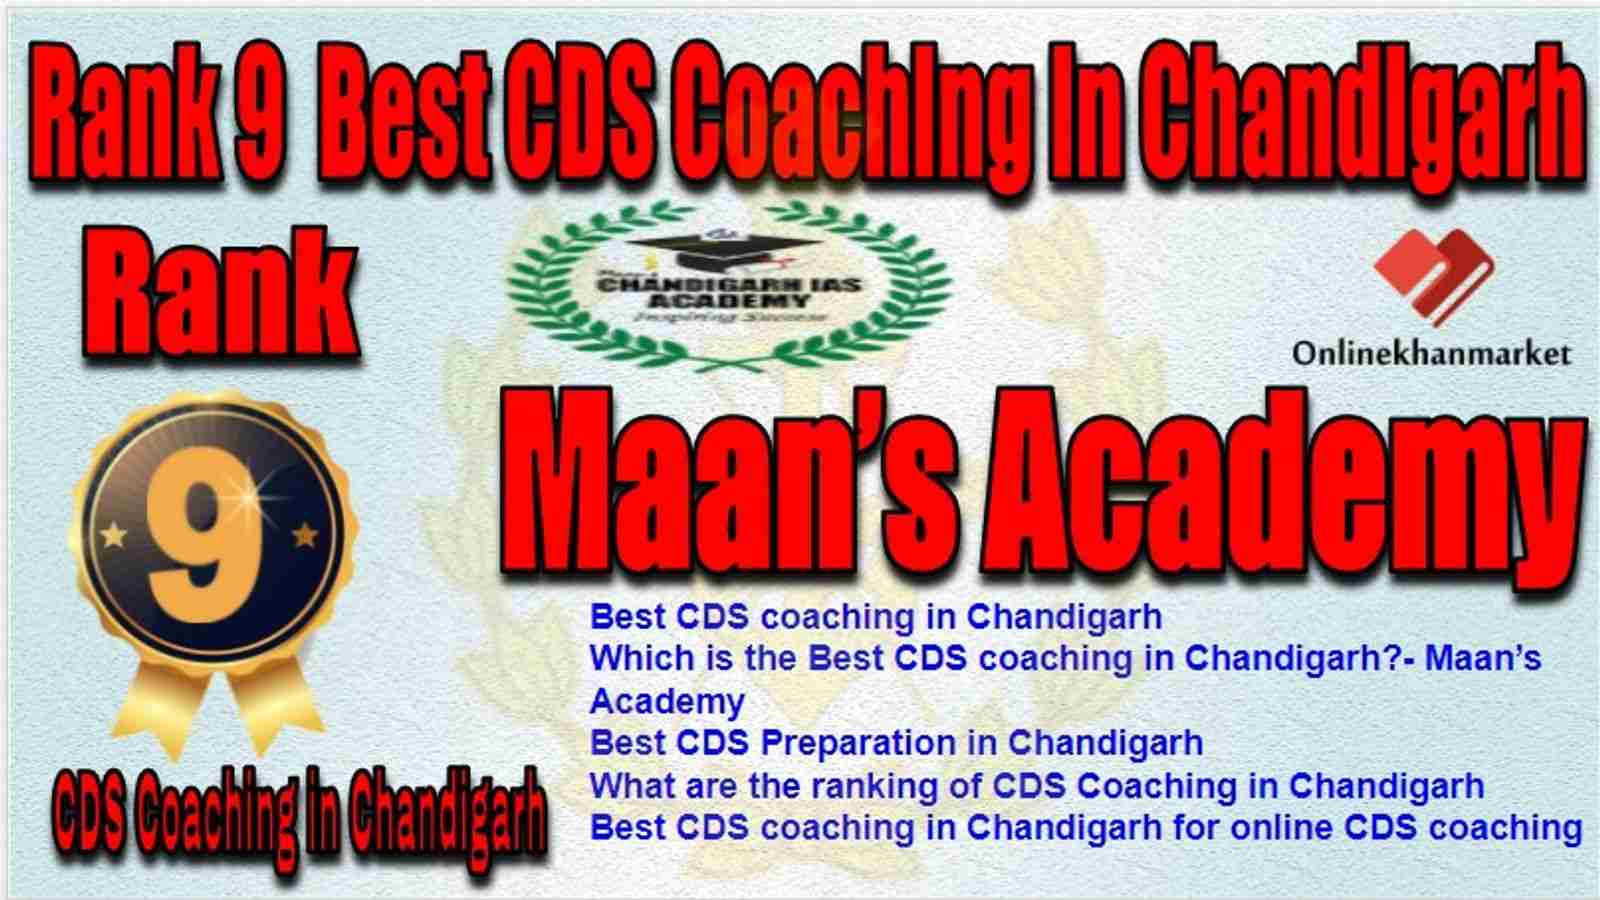 Rank 9 BEST CDS Coaching in chandigarh